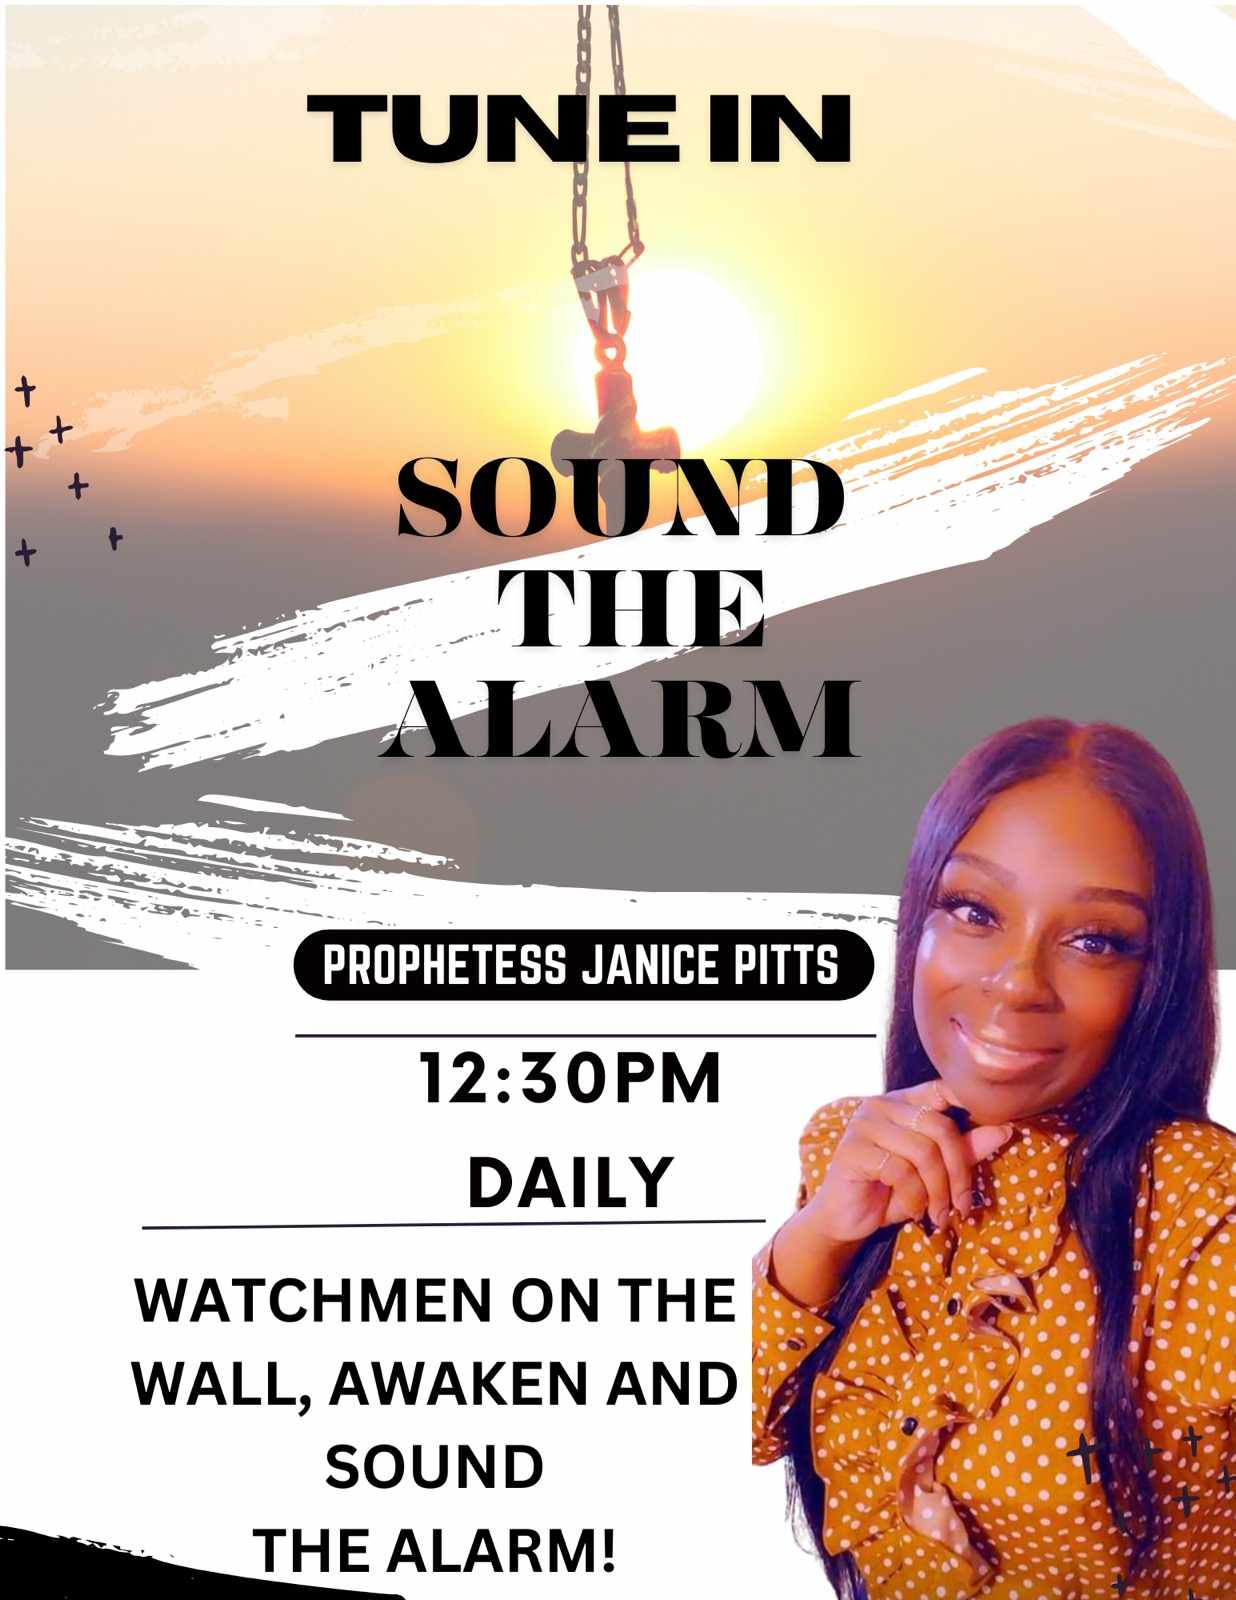 Sound The Alarm - Prophetess Janice Pitts